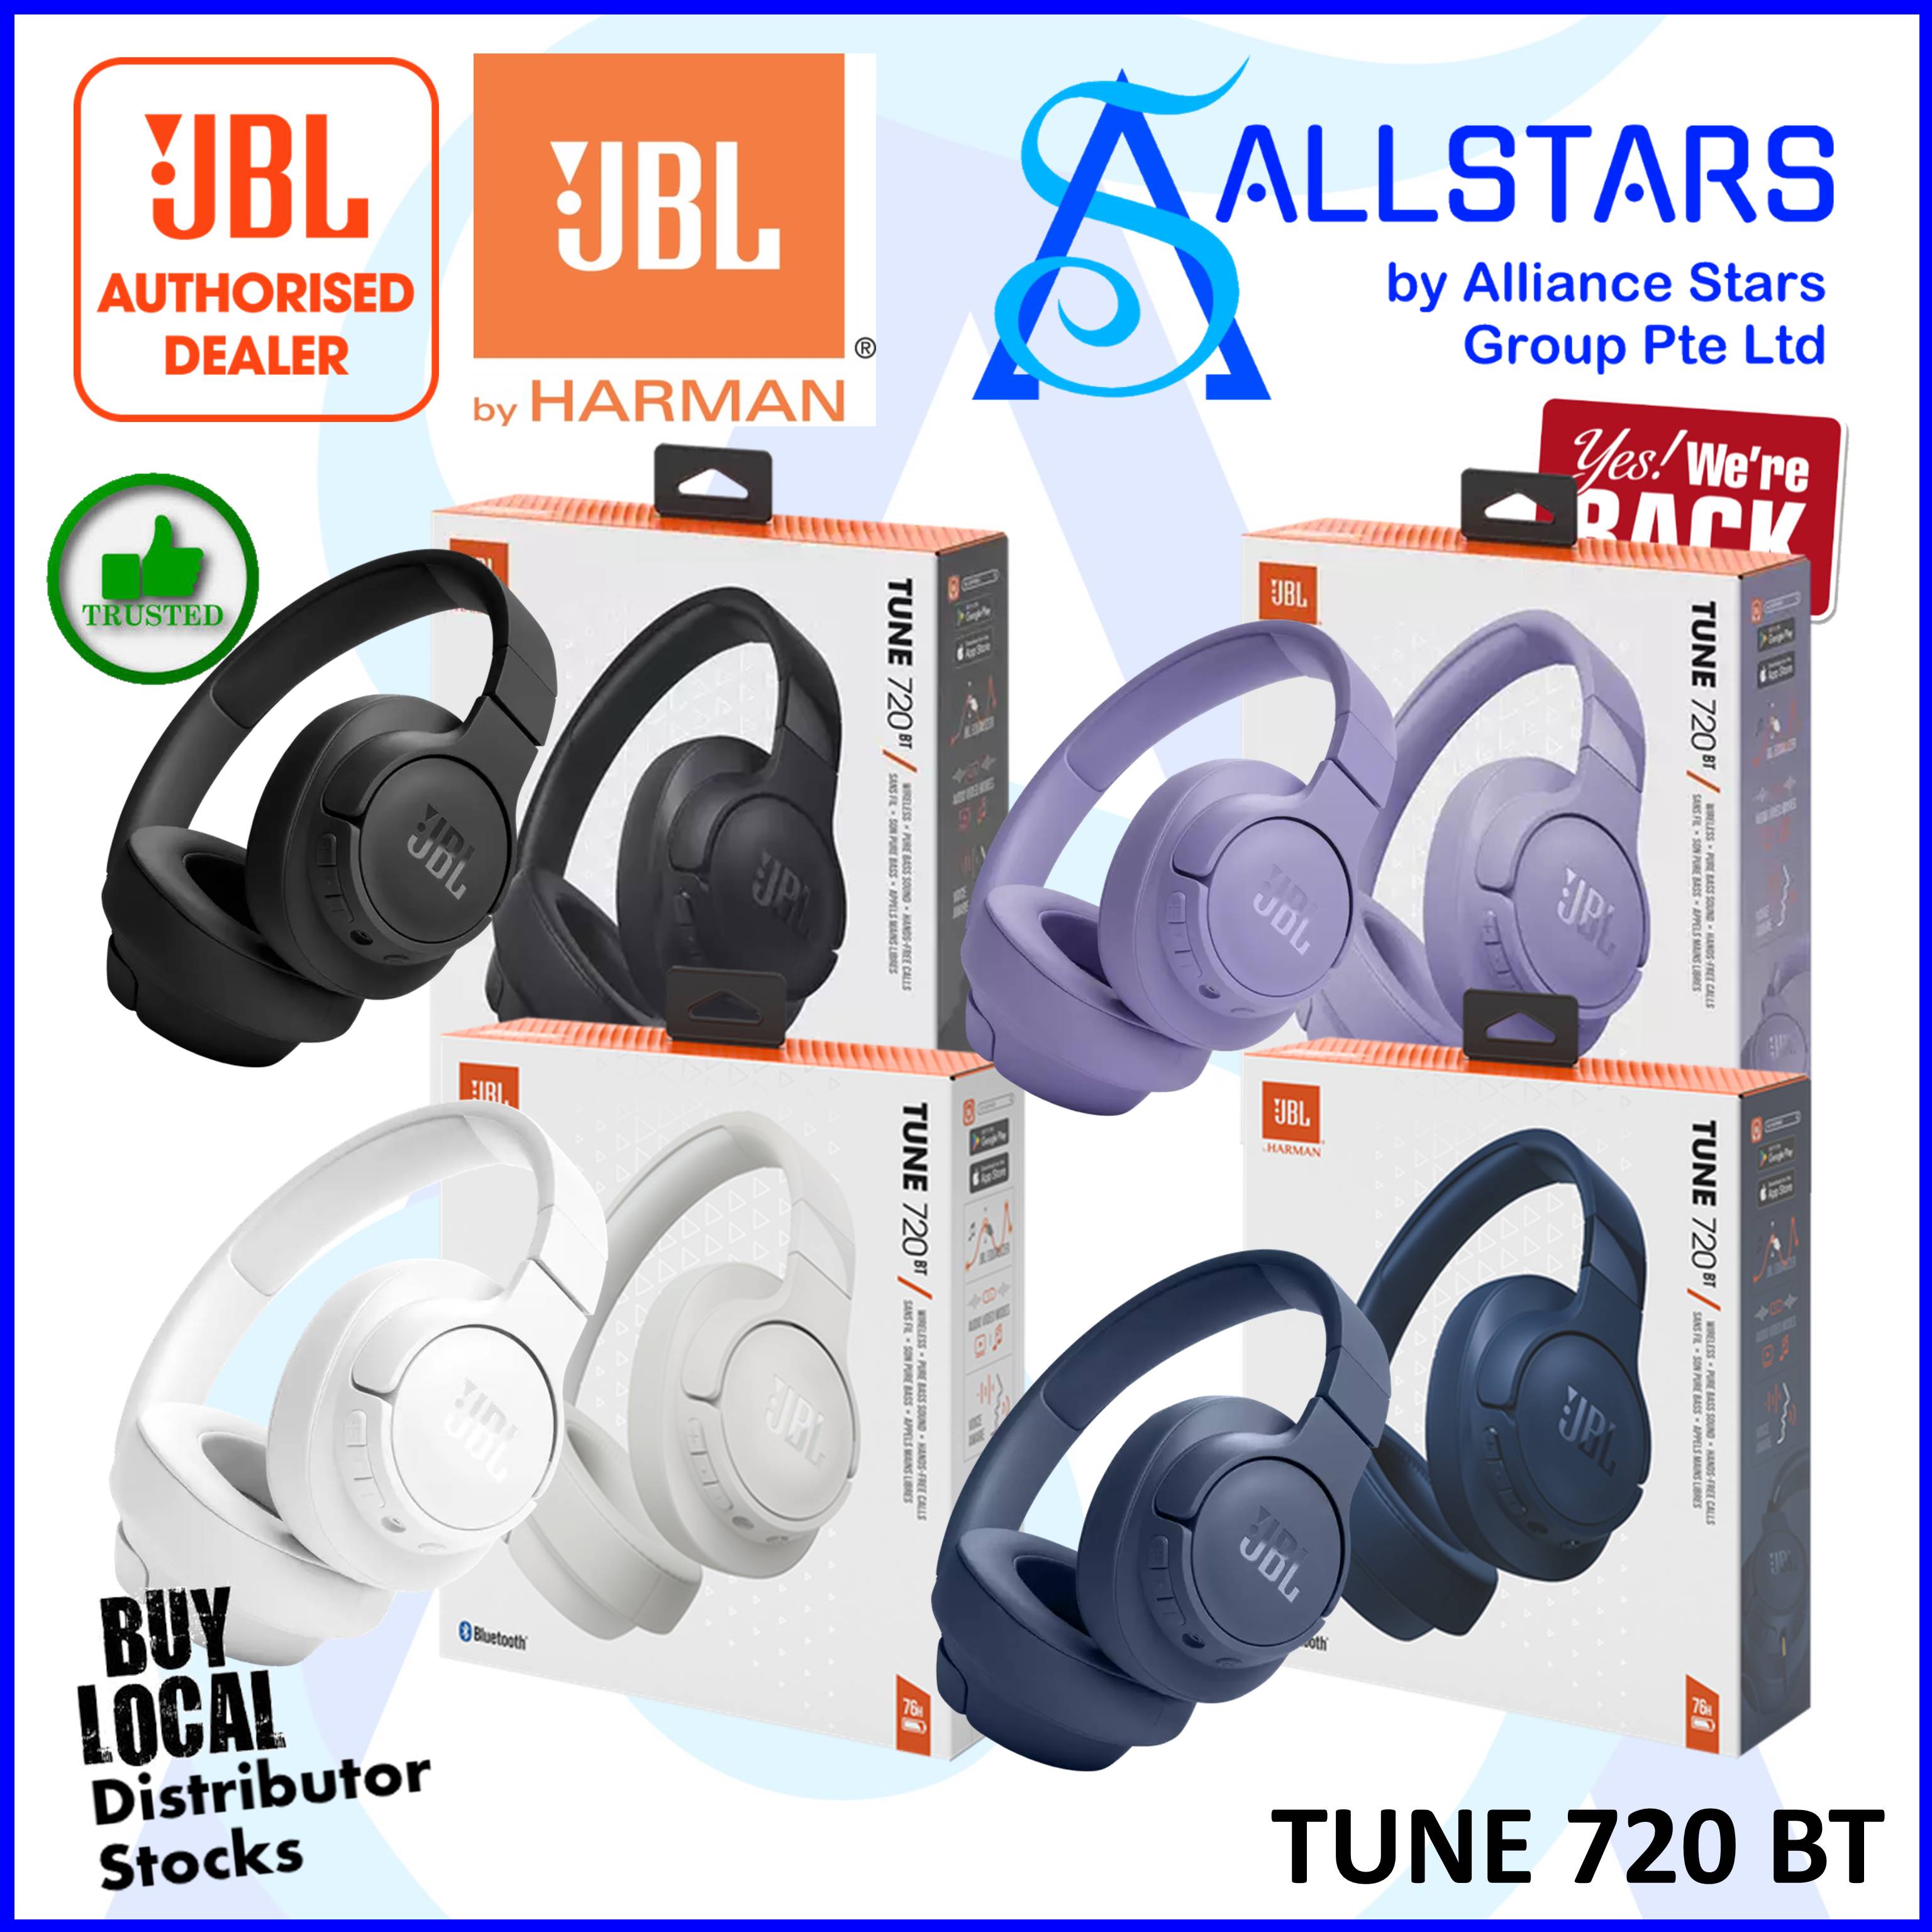 ALLSTARS : We Headset White : JBLT720BTBLU) JBLT720BTBLK Are (choice BT of 720 Tune / / Bluetooth Wireless Purple : : Promo) JBL / : Ear JBLT720BTPUR) JBLT720BTWHT / Over Blue Back Black